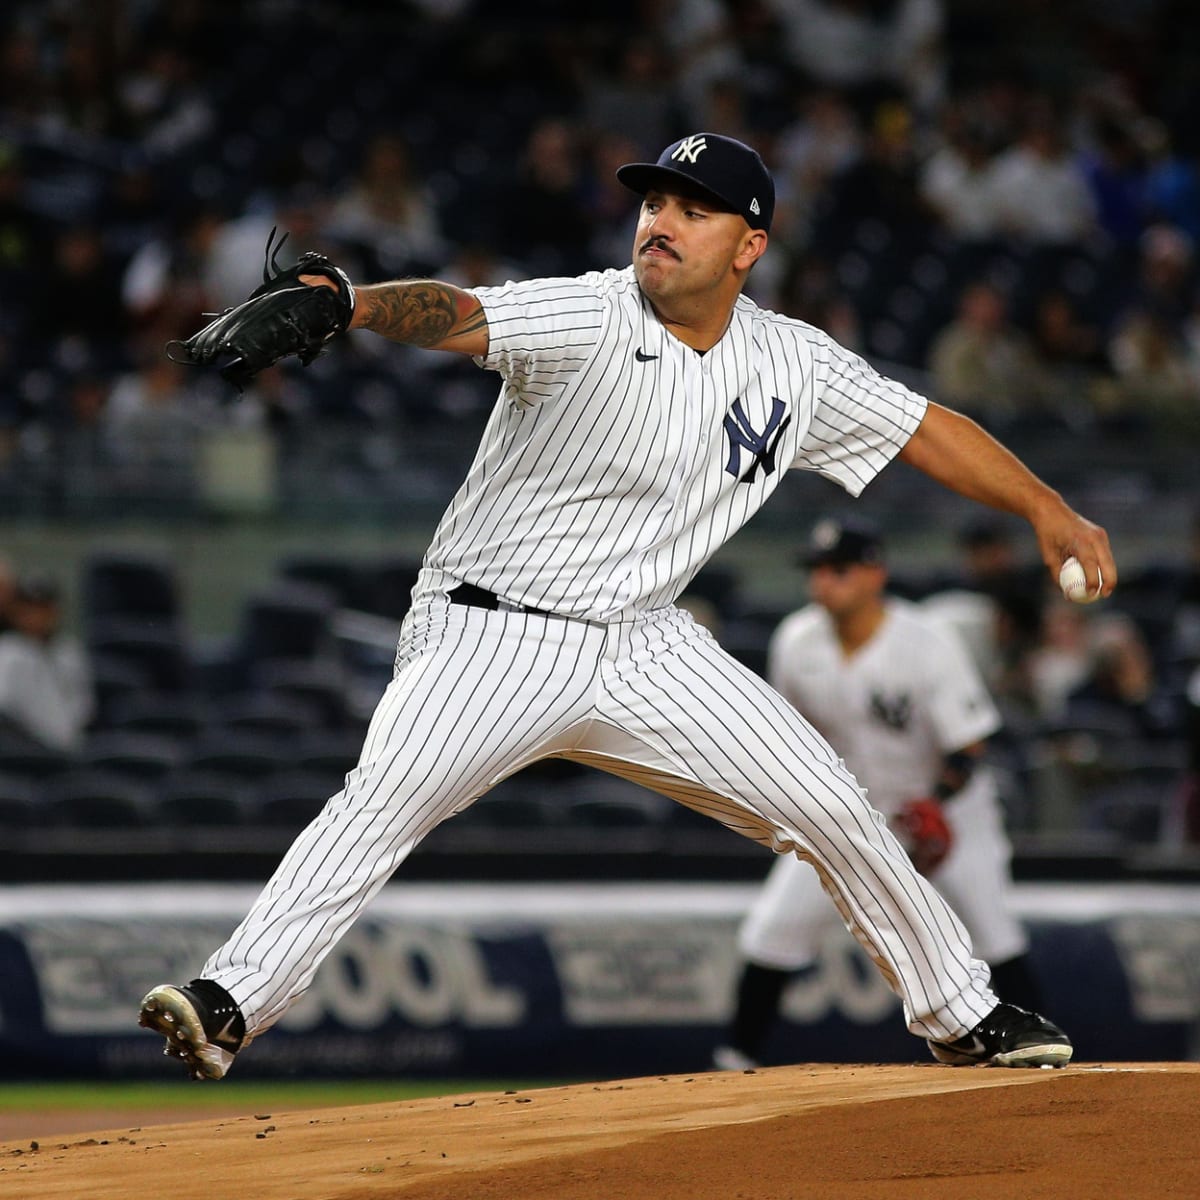 Nestor Cortes Jr. has been enshrined in Yankees lore